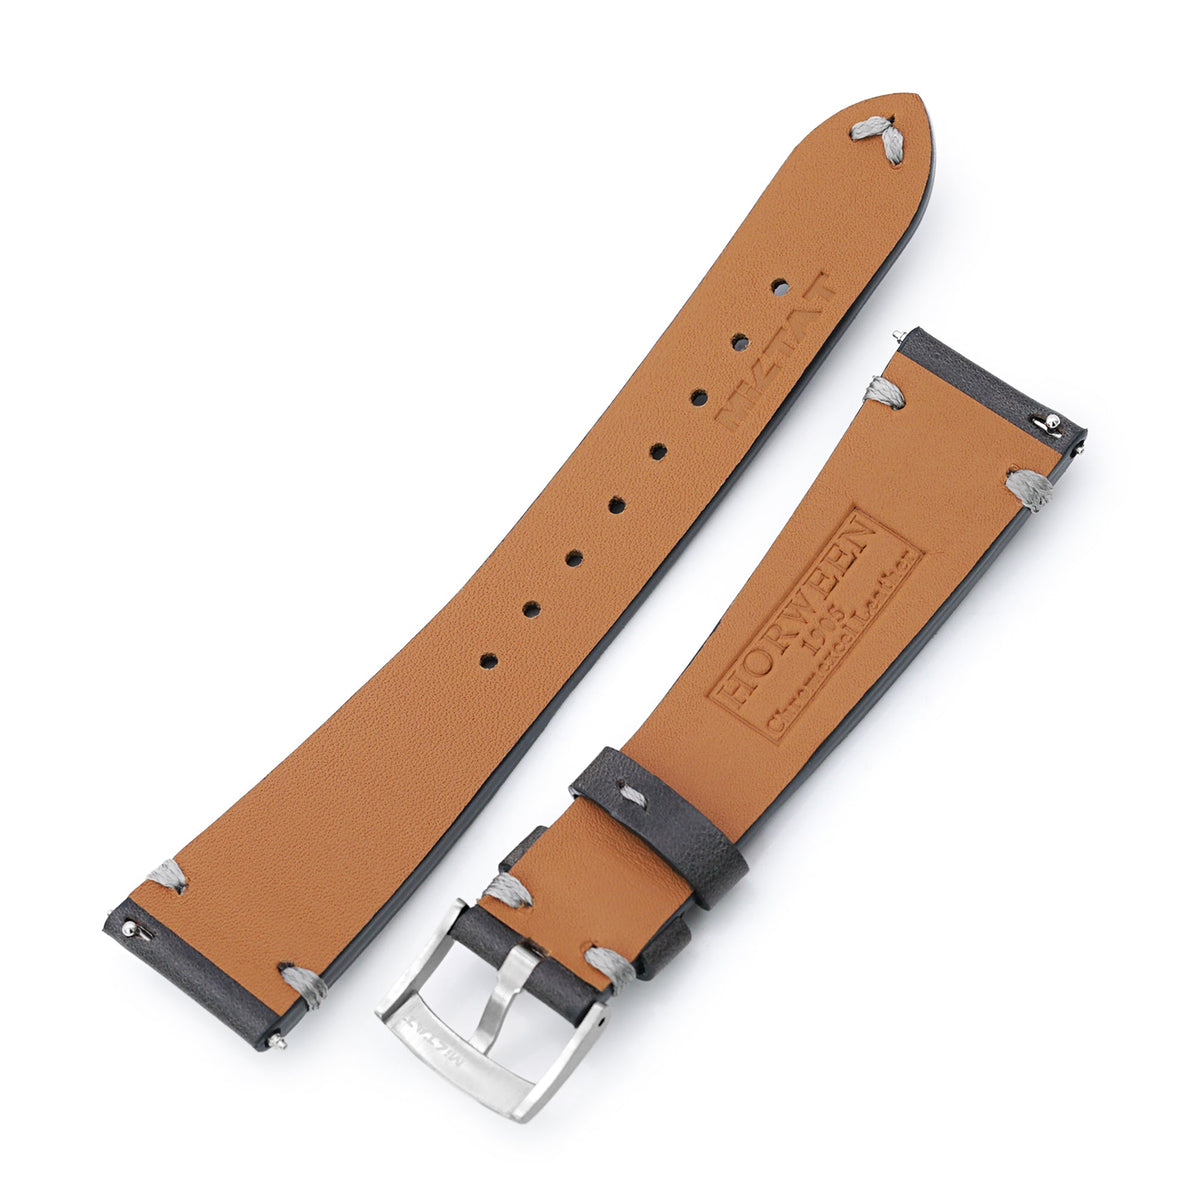 Calfskin Light Pink Epi Leather Watch Strap Band 18mm 19mm 21mm 20mm 22mm